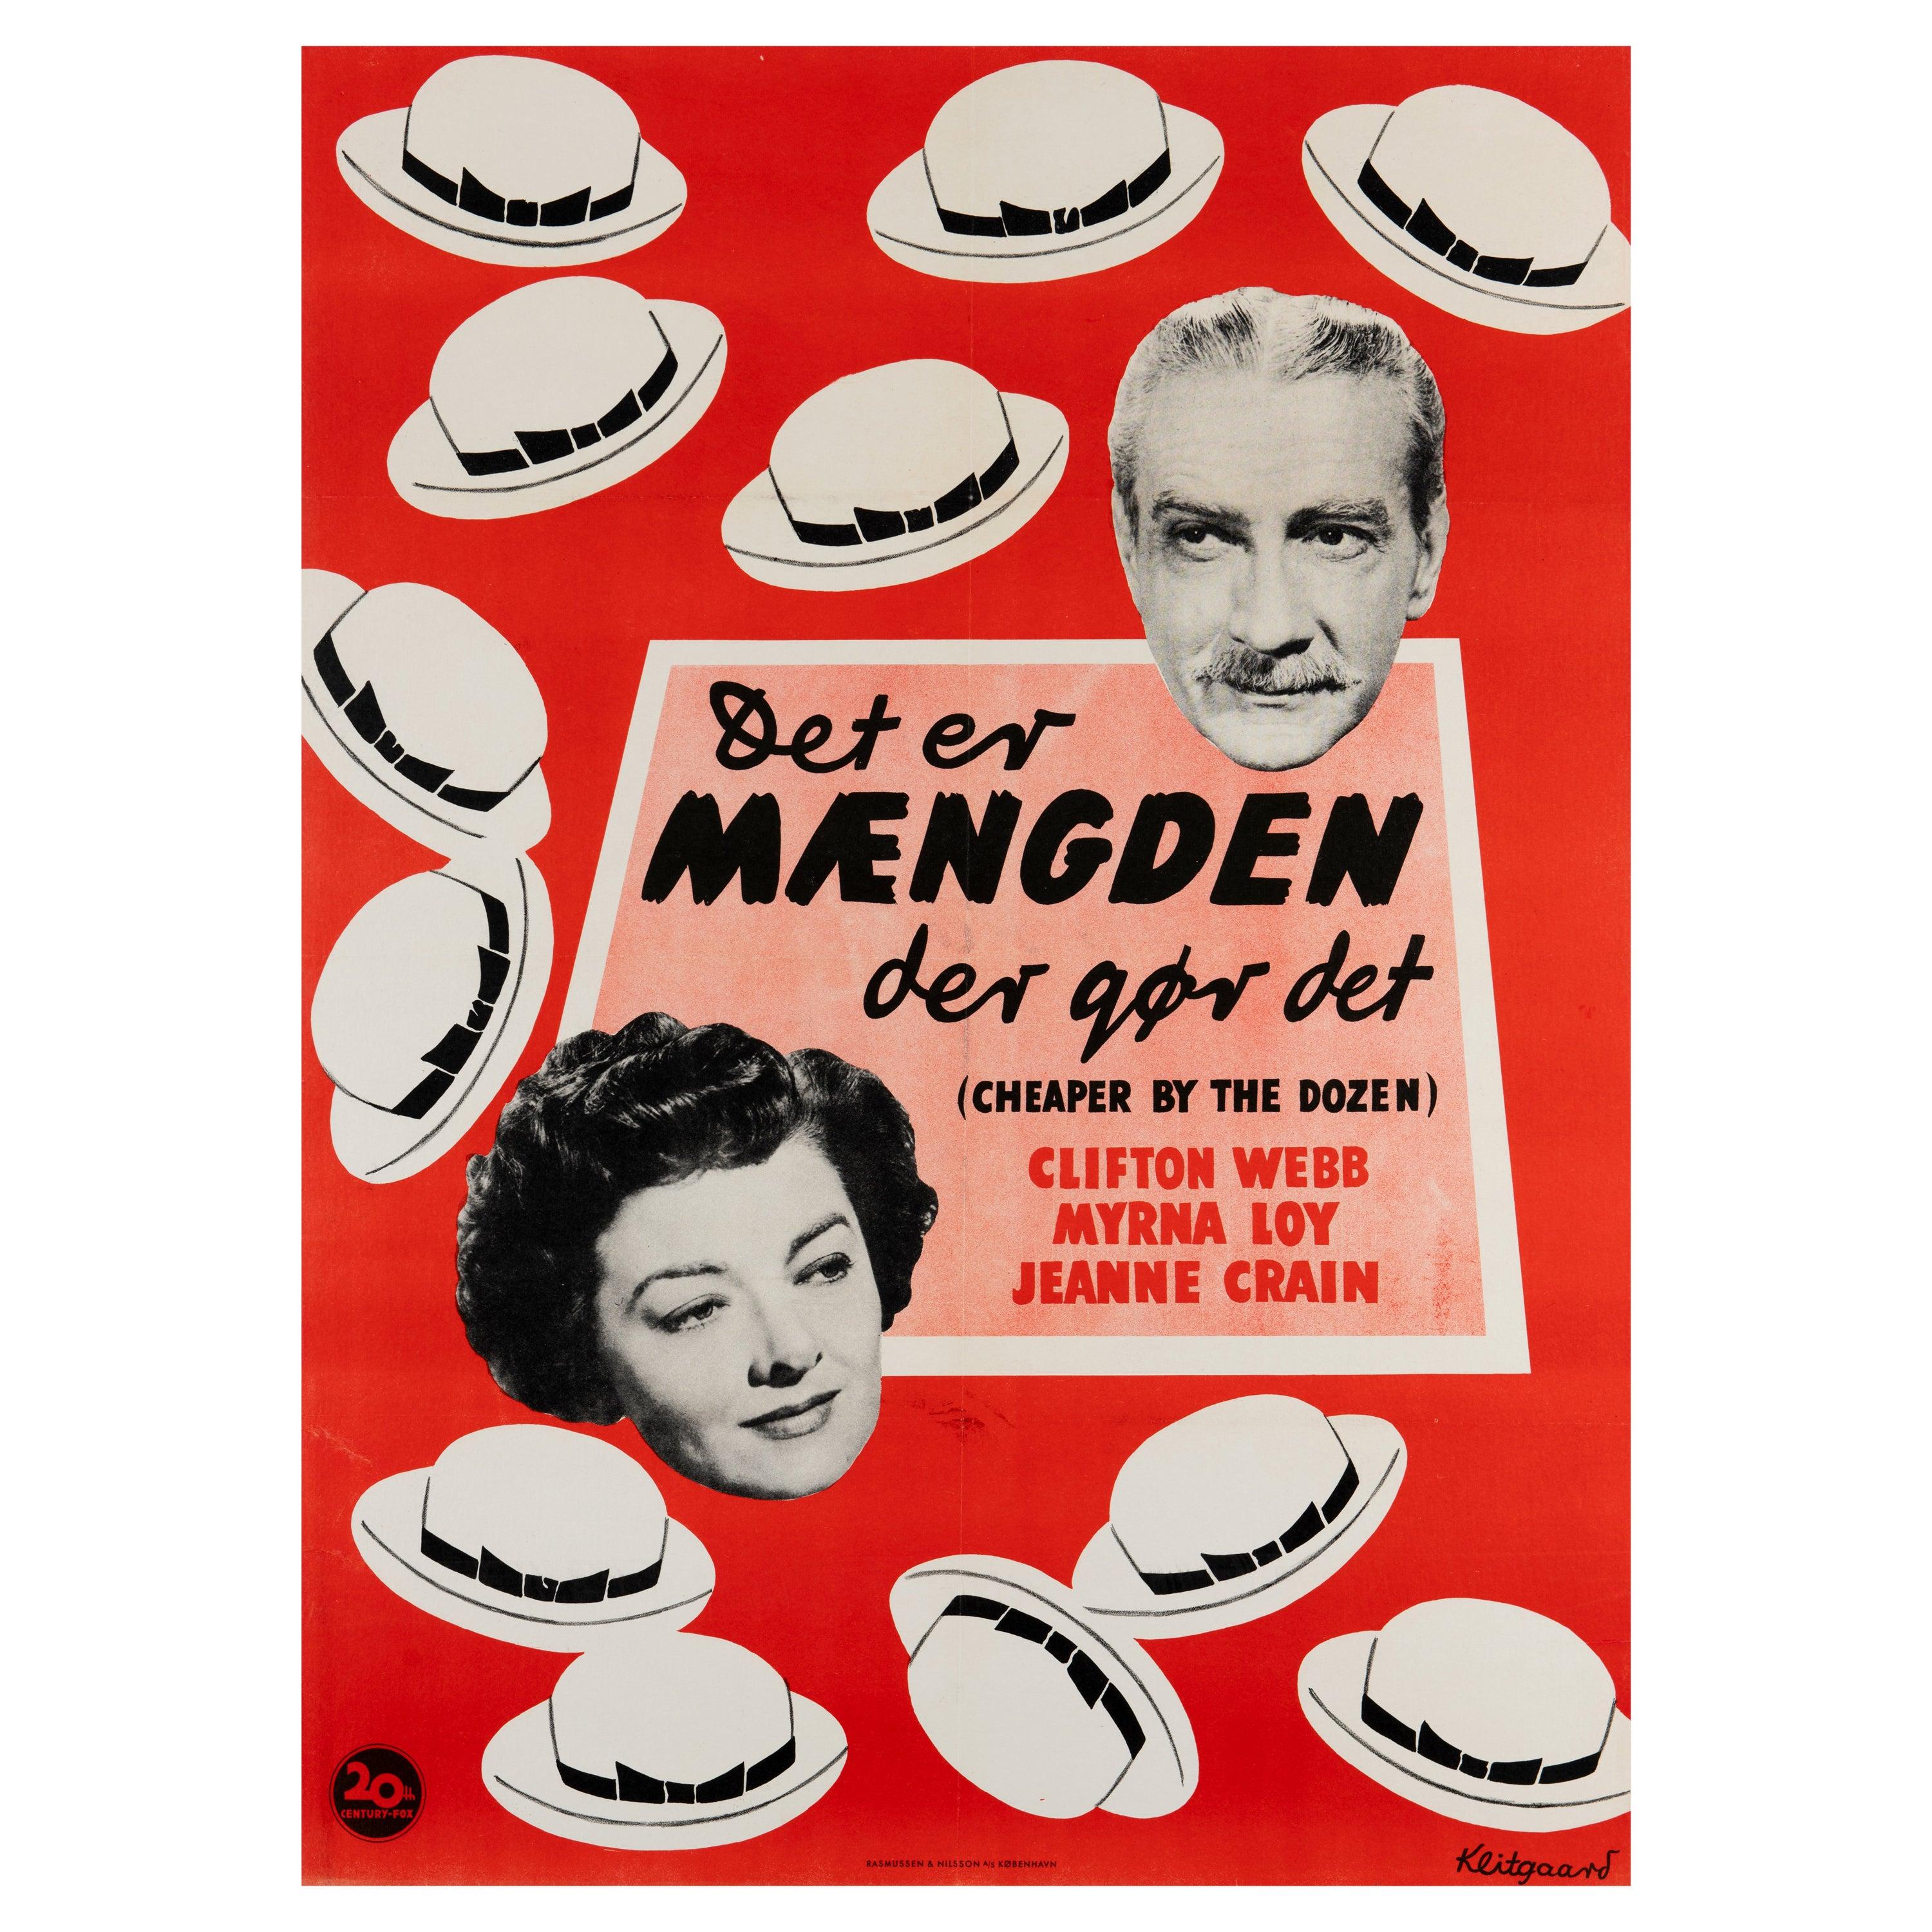 'Cheaper by the Dozen' Original Vintage Movie Poster, Danish, 1951